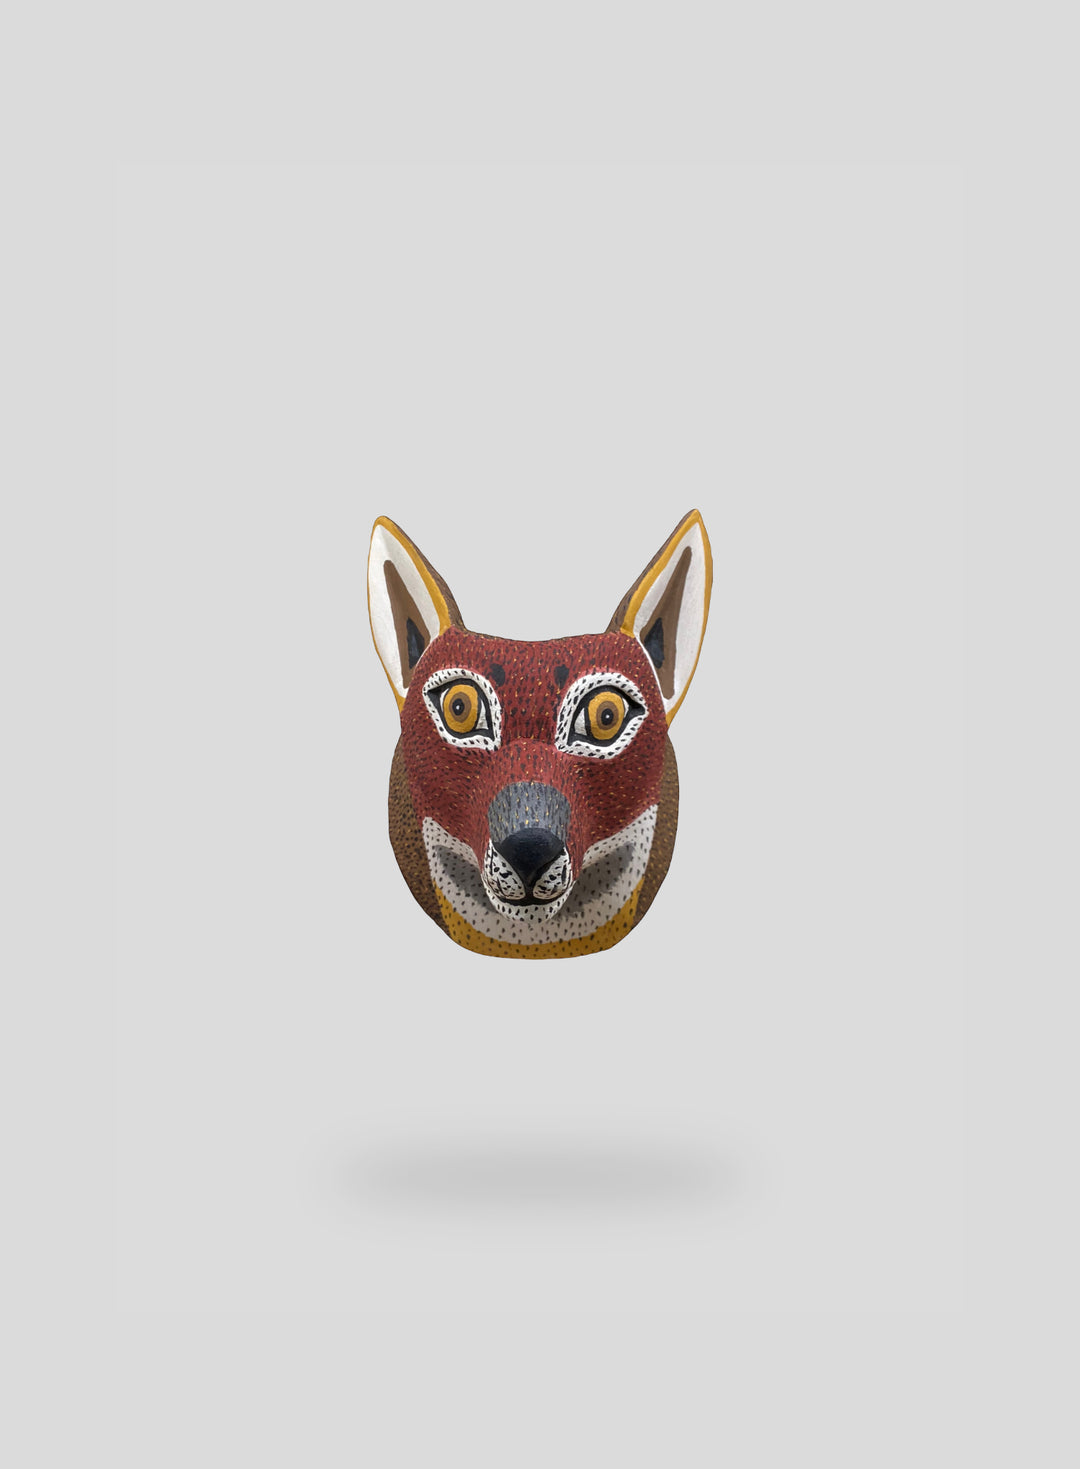 The Mystical Fox